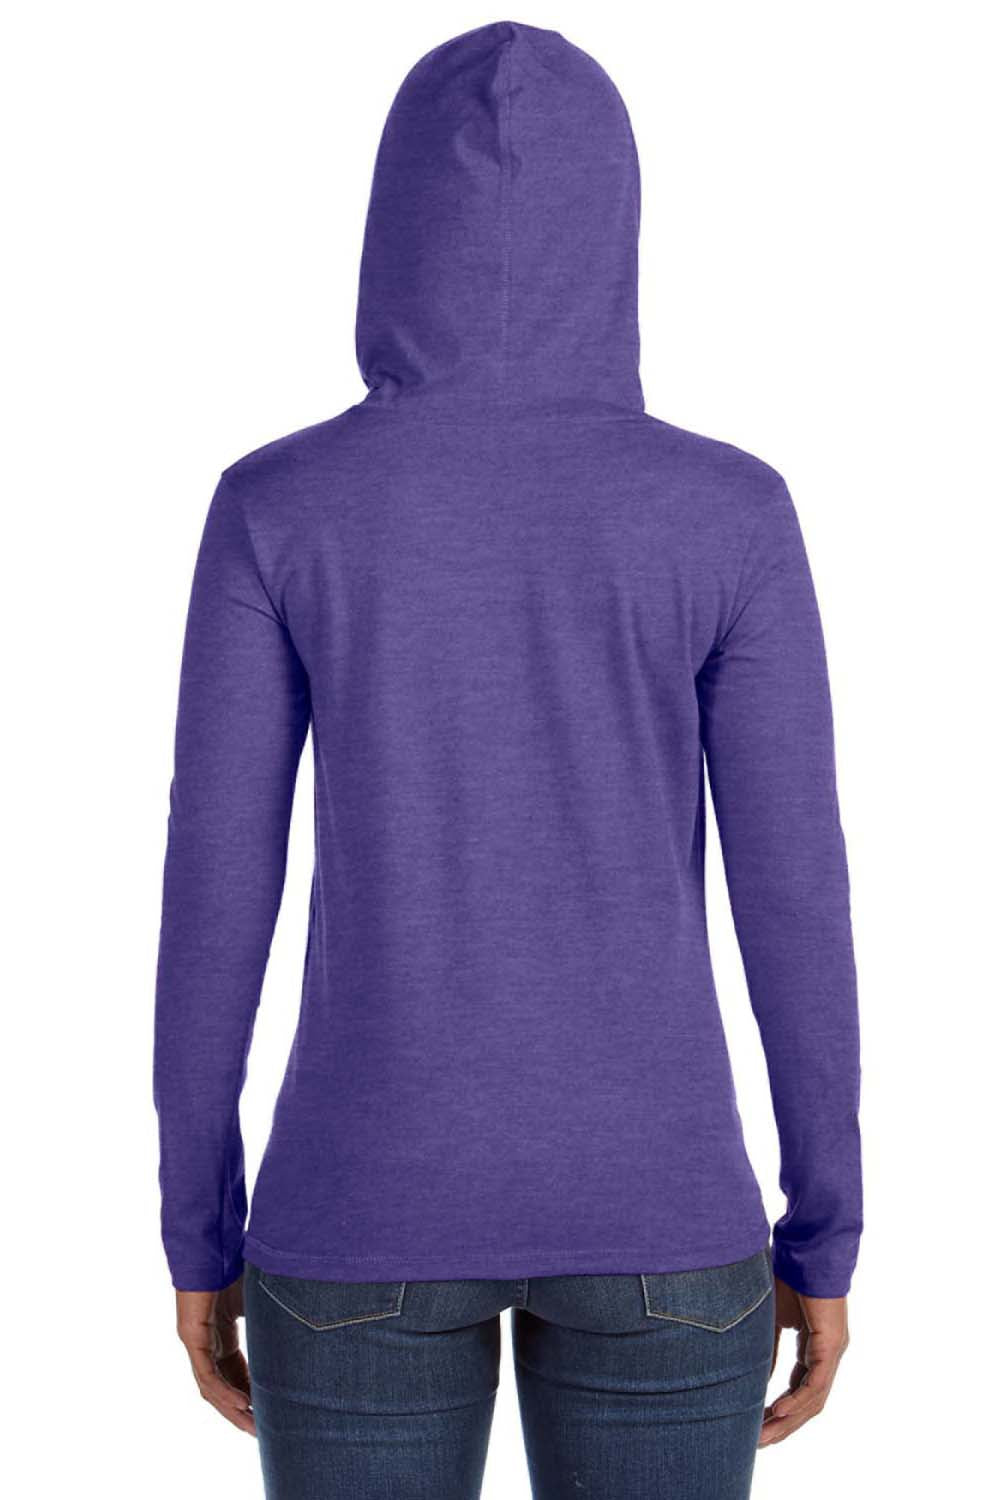 Anvil 887L Womens Long Sleeve Hooded T-Shirt Hoodie Heather Purple/Neon Yellow Back